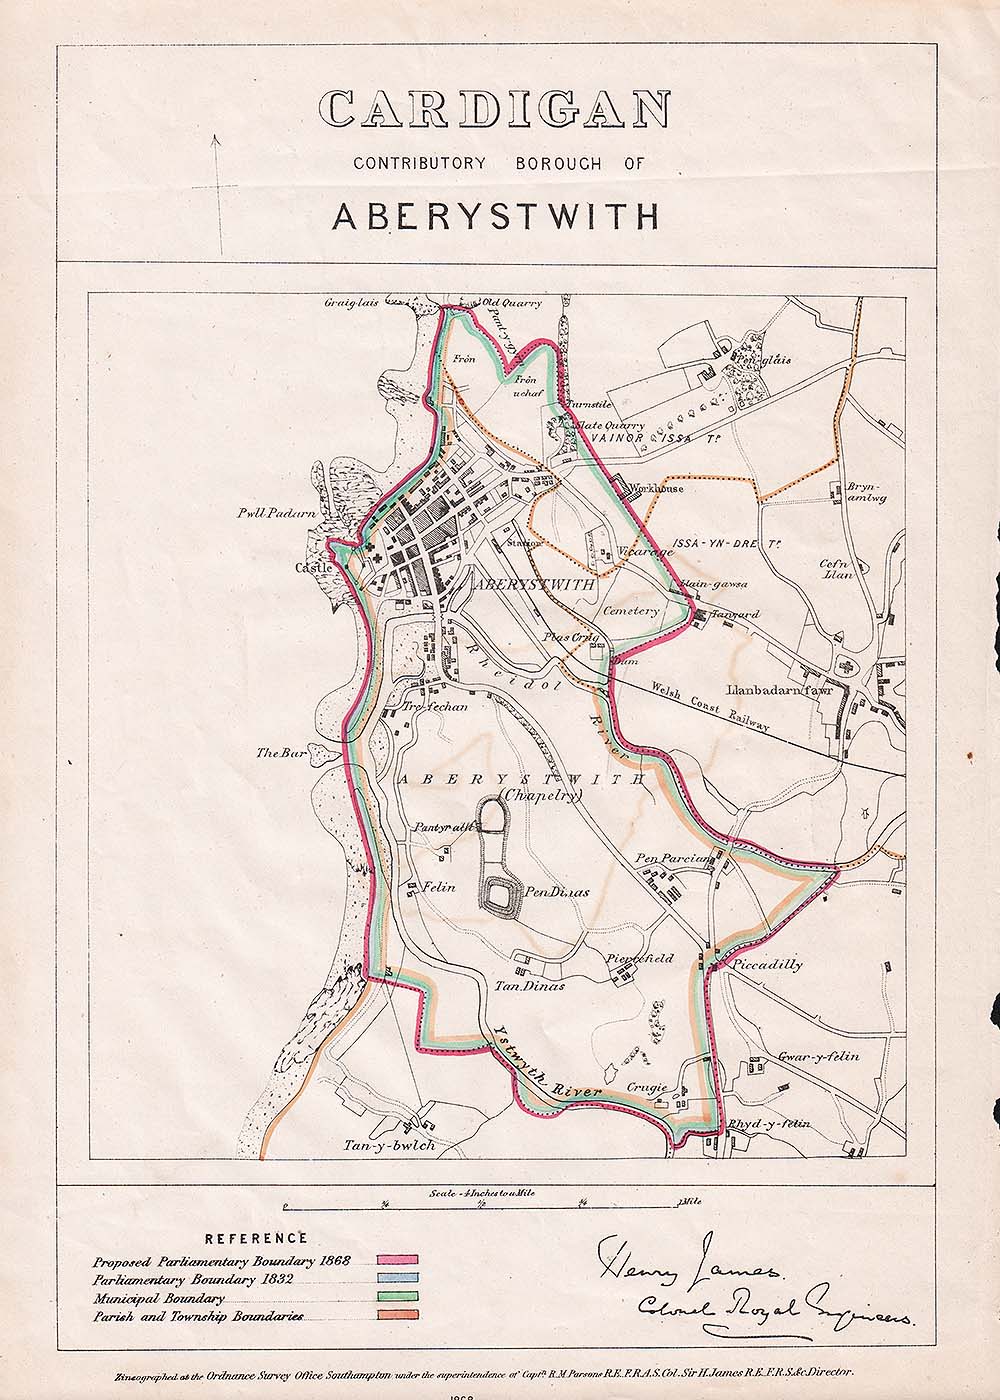 Contributory Borough of Aberystwyth.